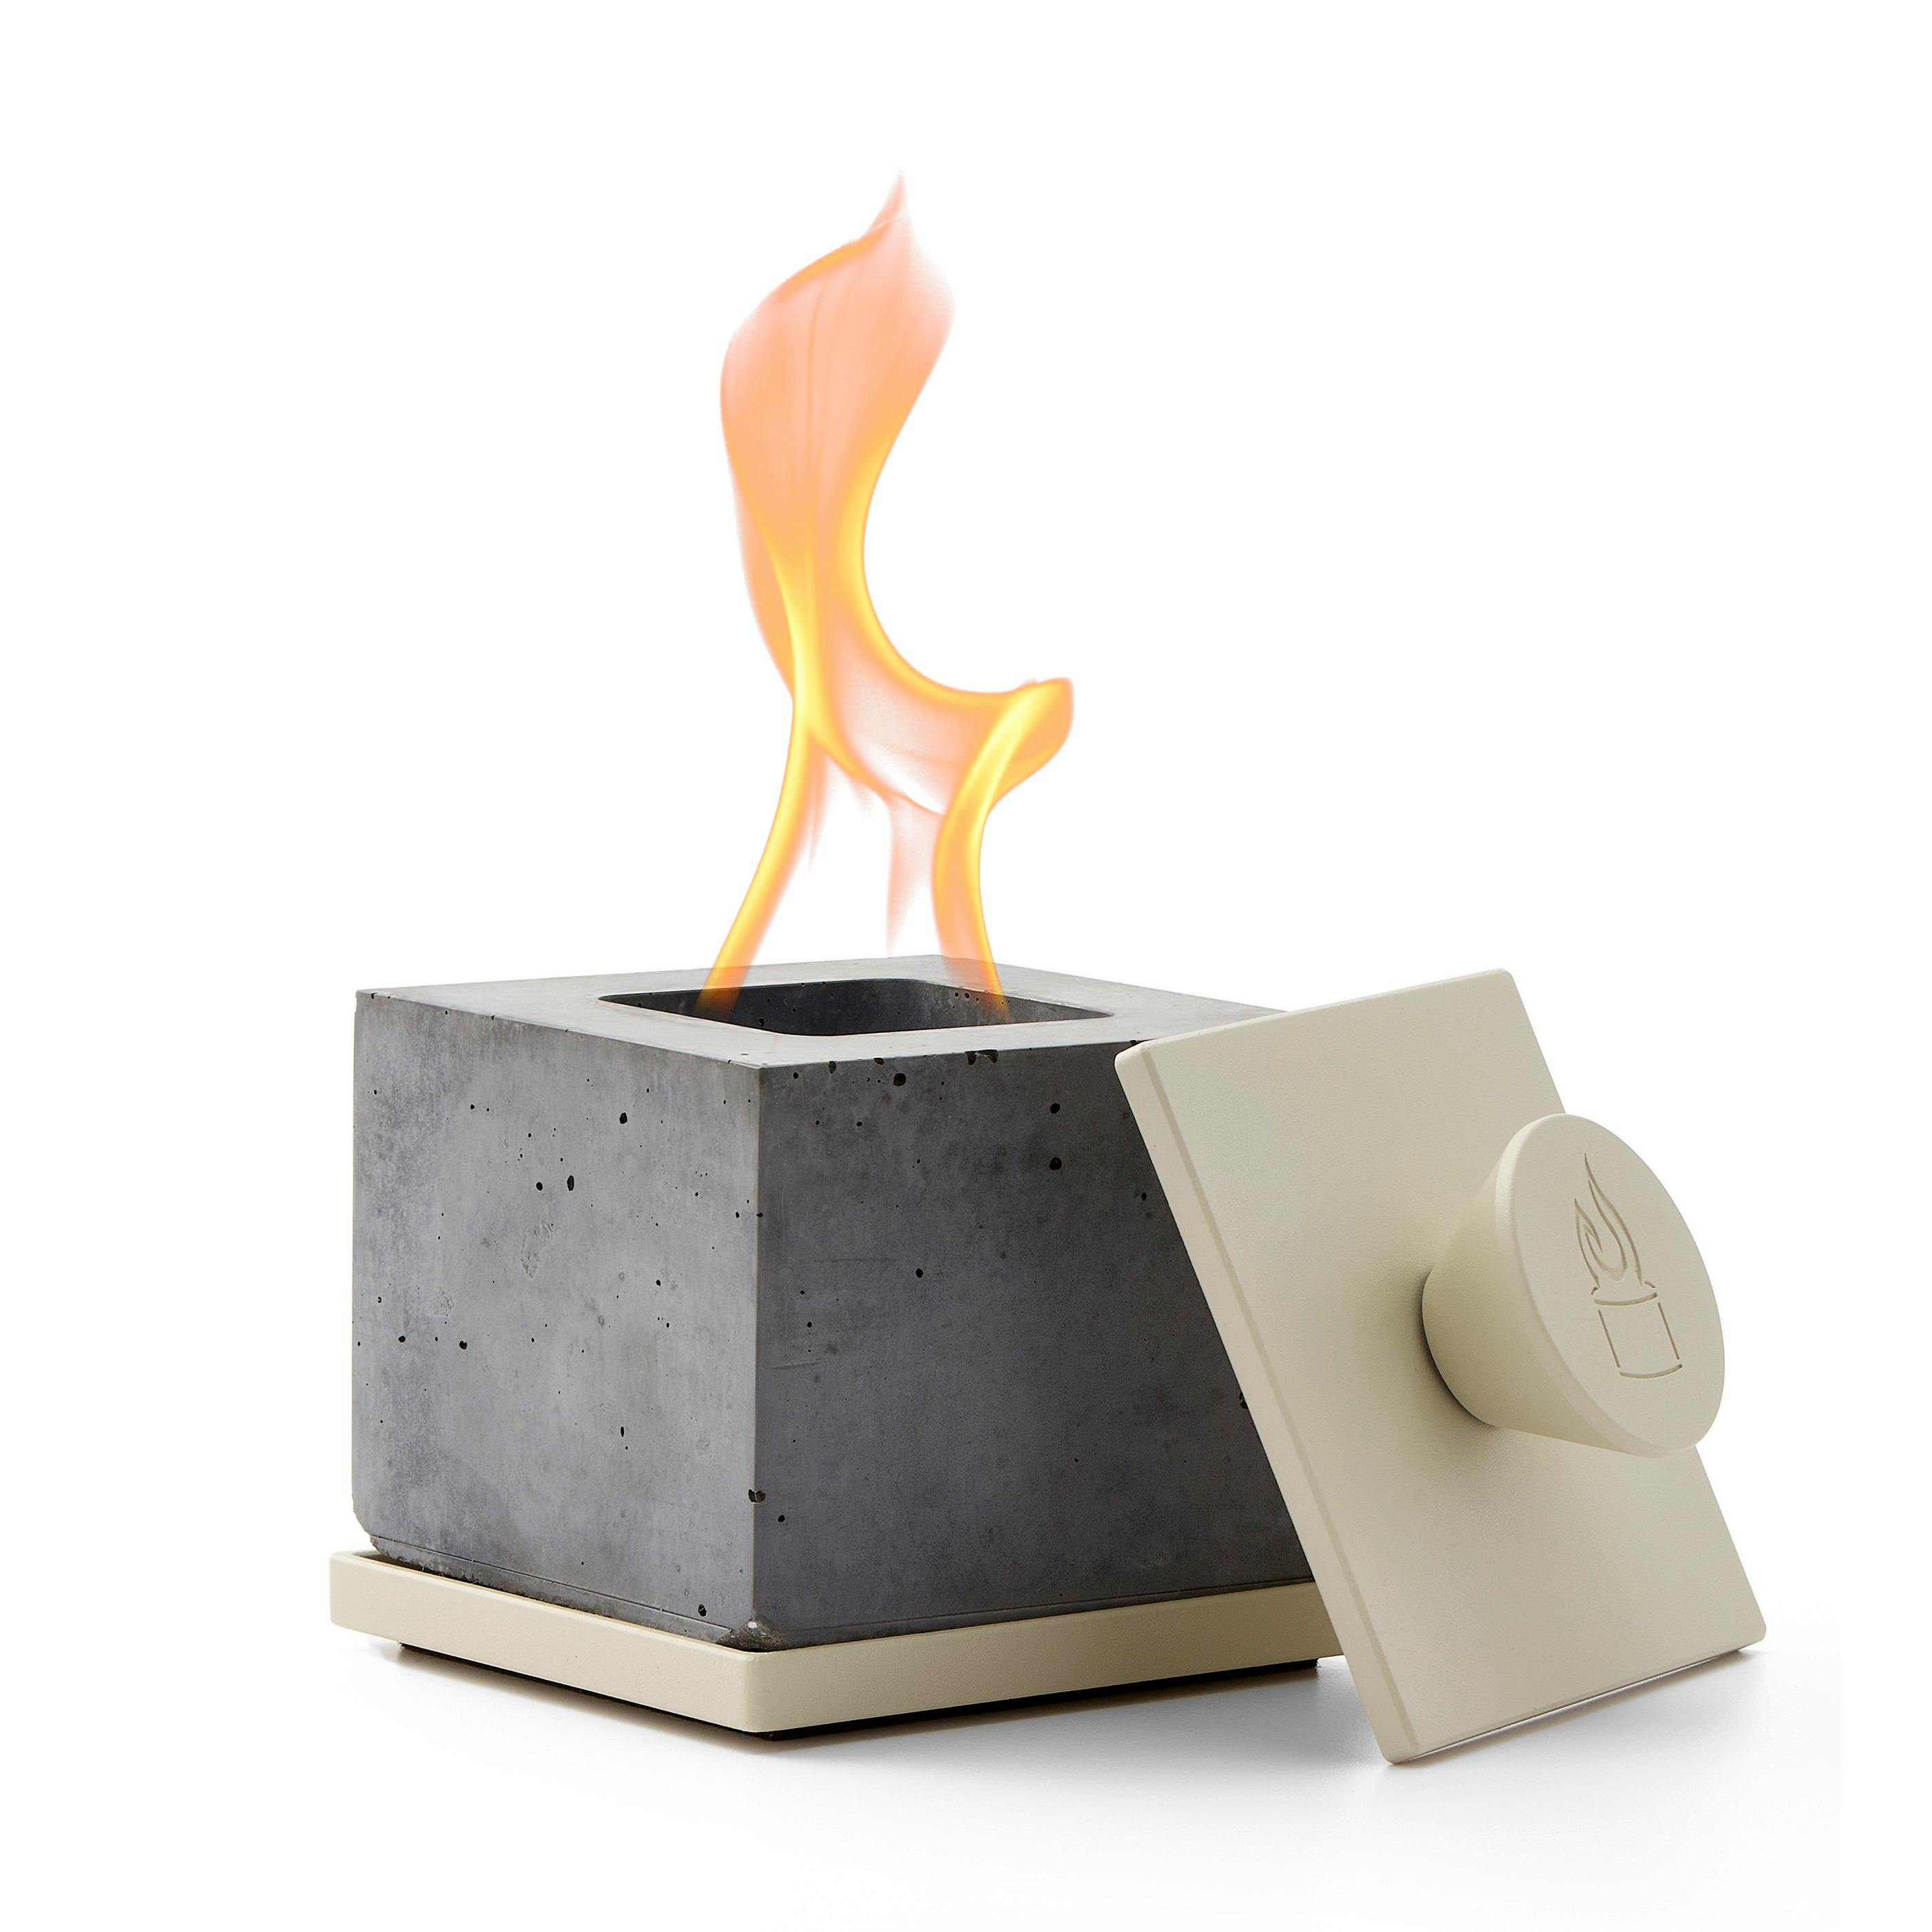 Personal Square Concrete Fireplace Kit